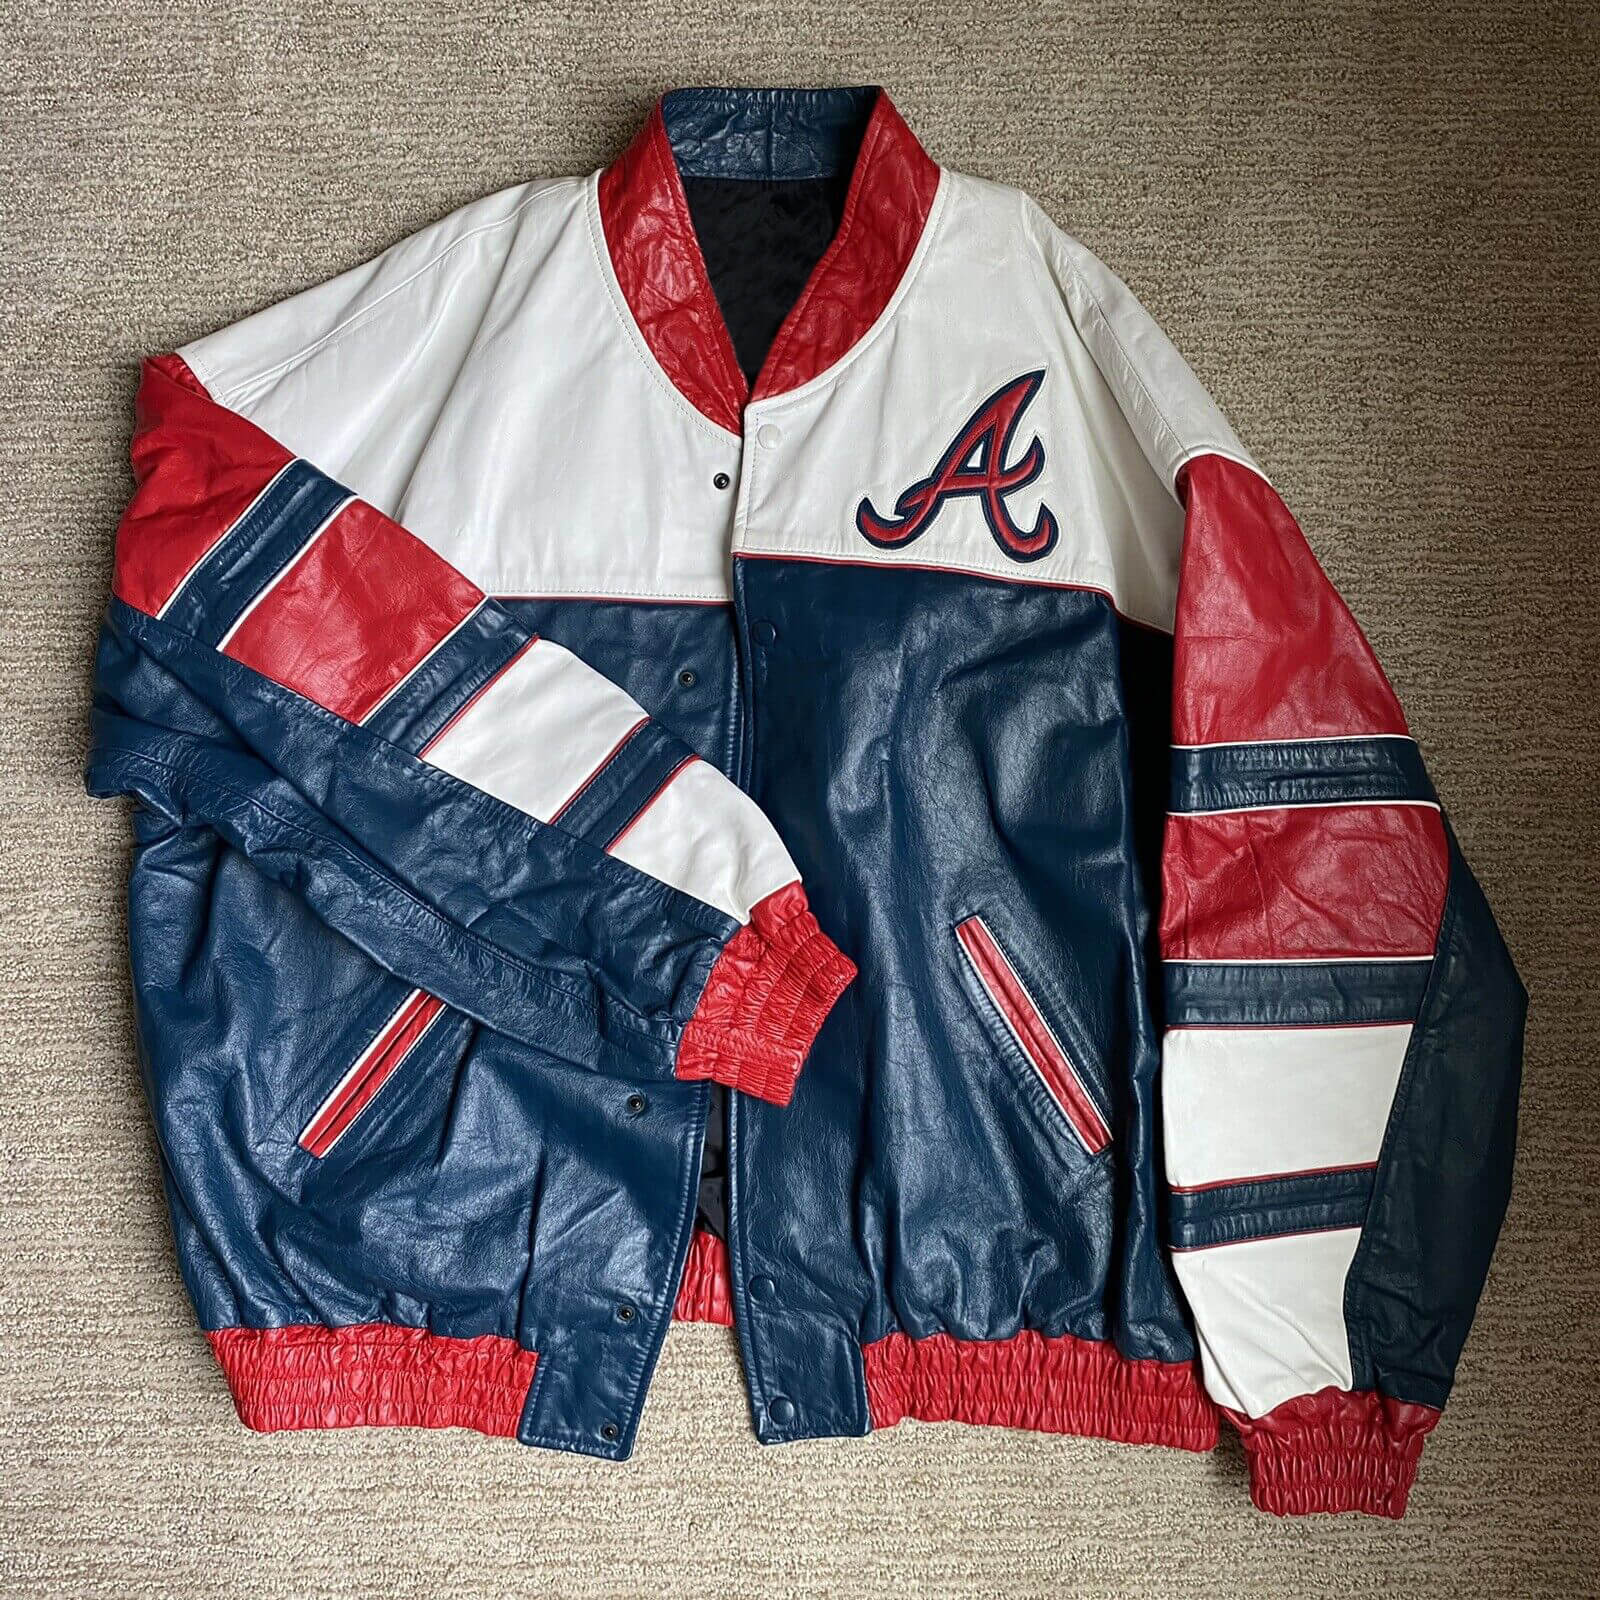 Vintage MLB Atlanta Braves Varsity Jacket Size Large Made in USA